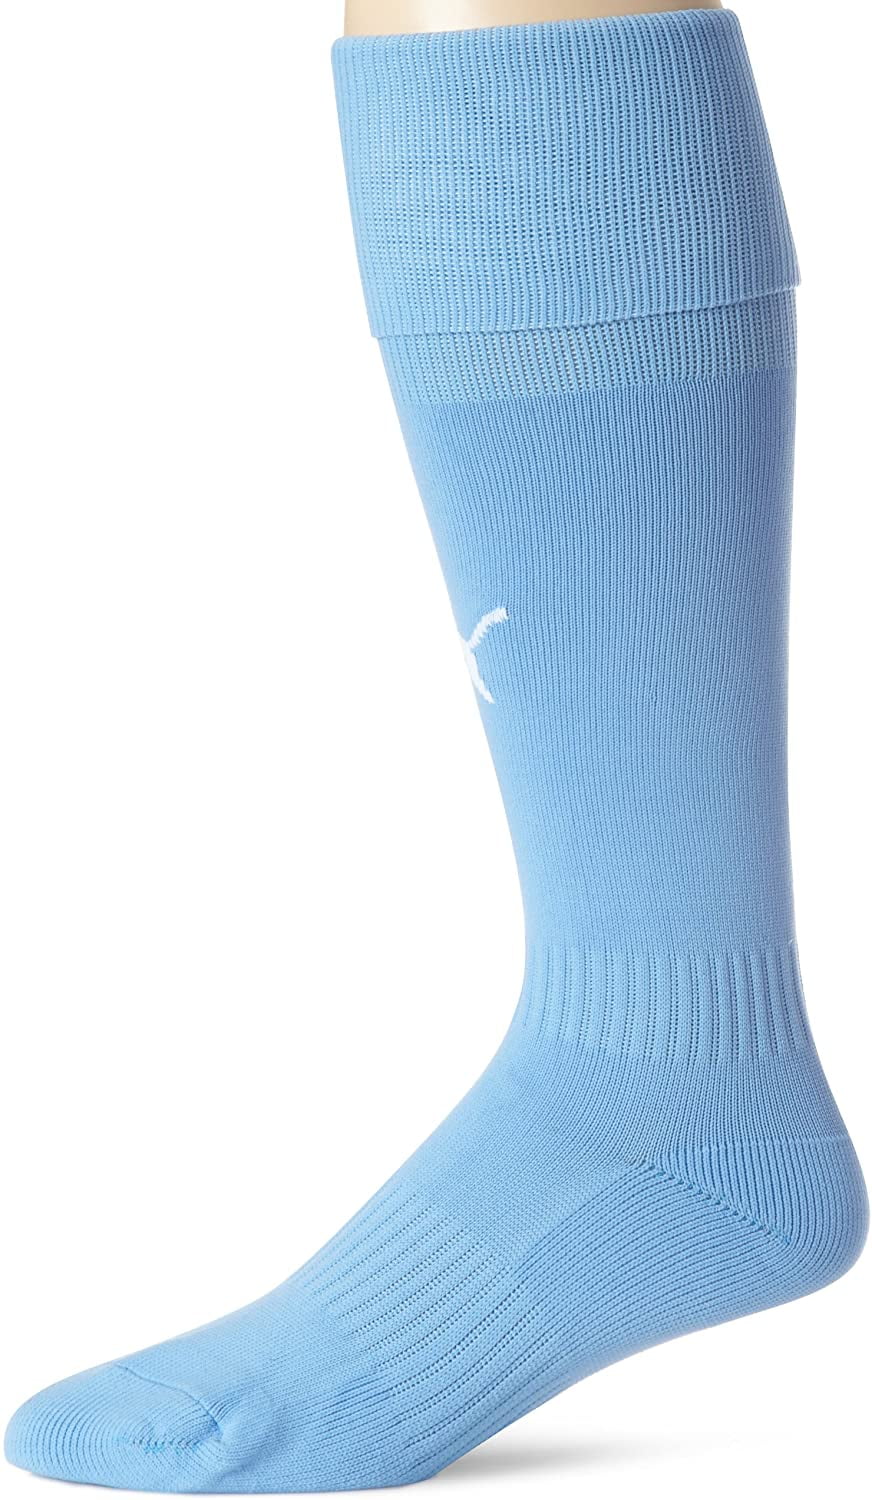 puma youth soccer socks